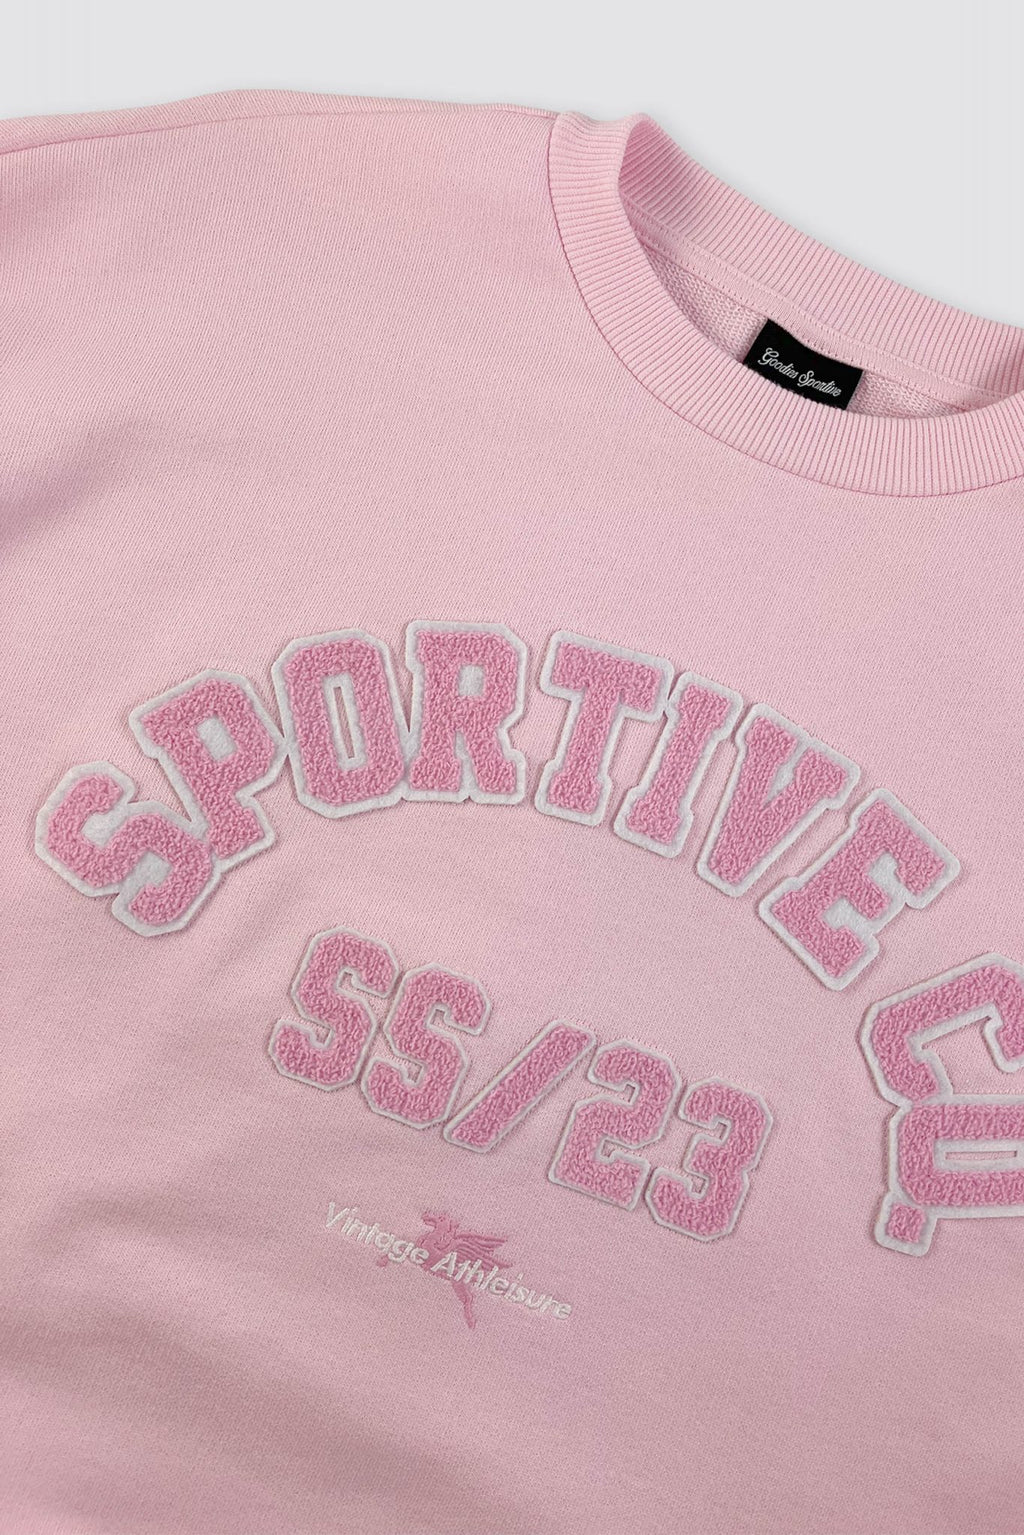 Goodies Sportive  - Pink Towel  Crewneck Pink